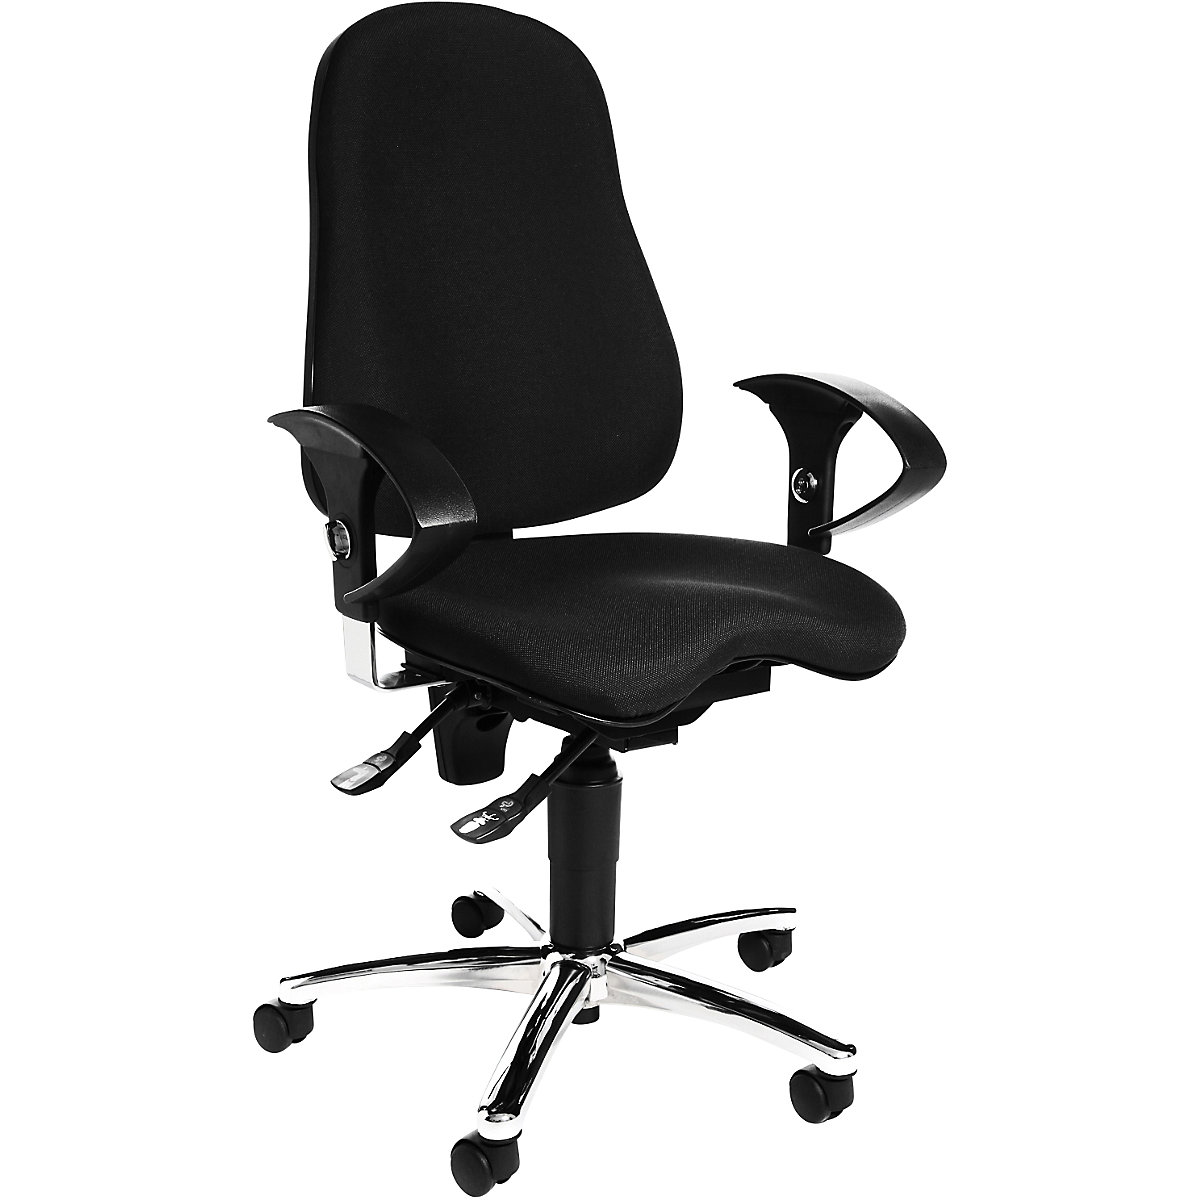 SITNESS 10 office swivel chair – Topstar